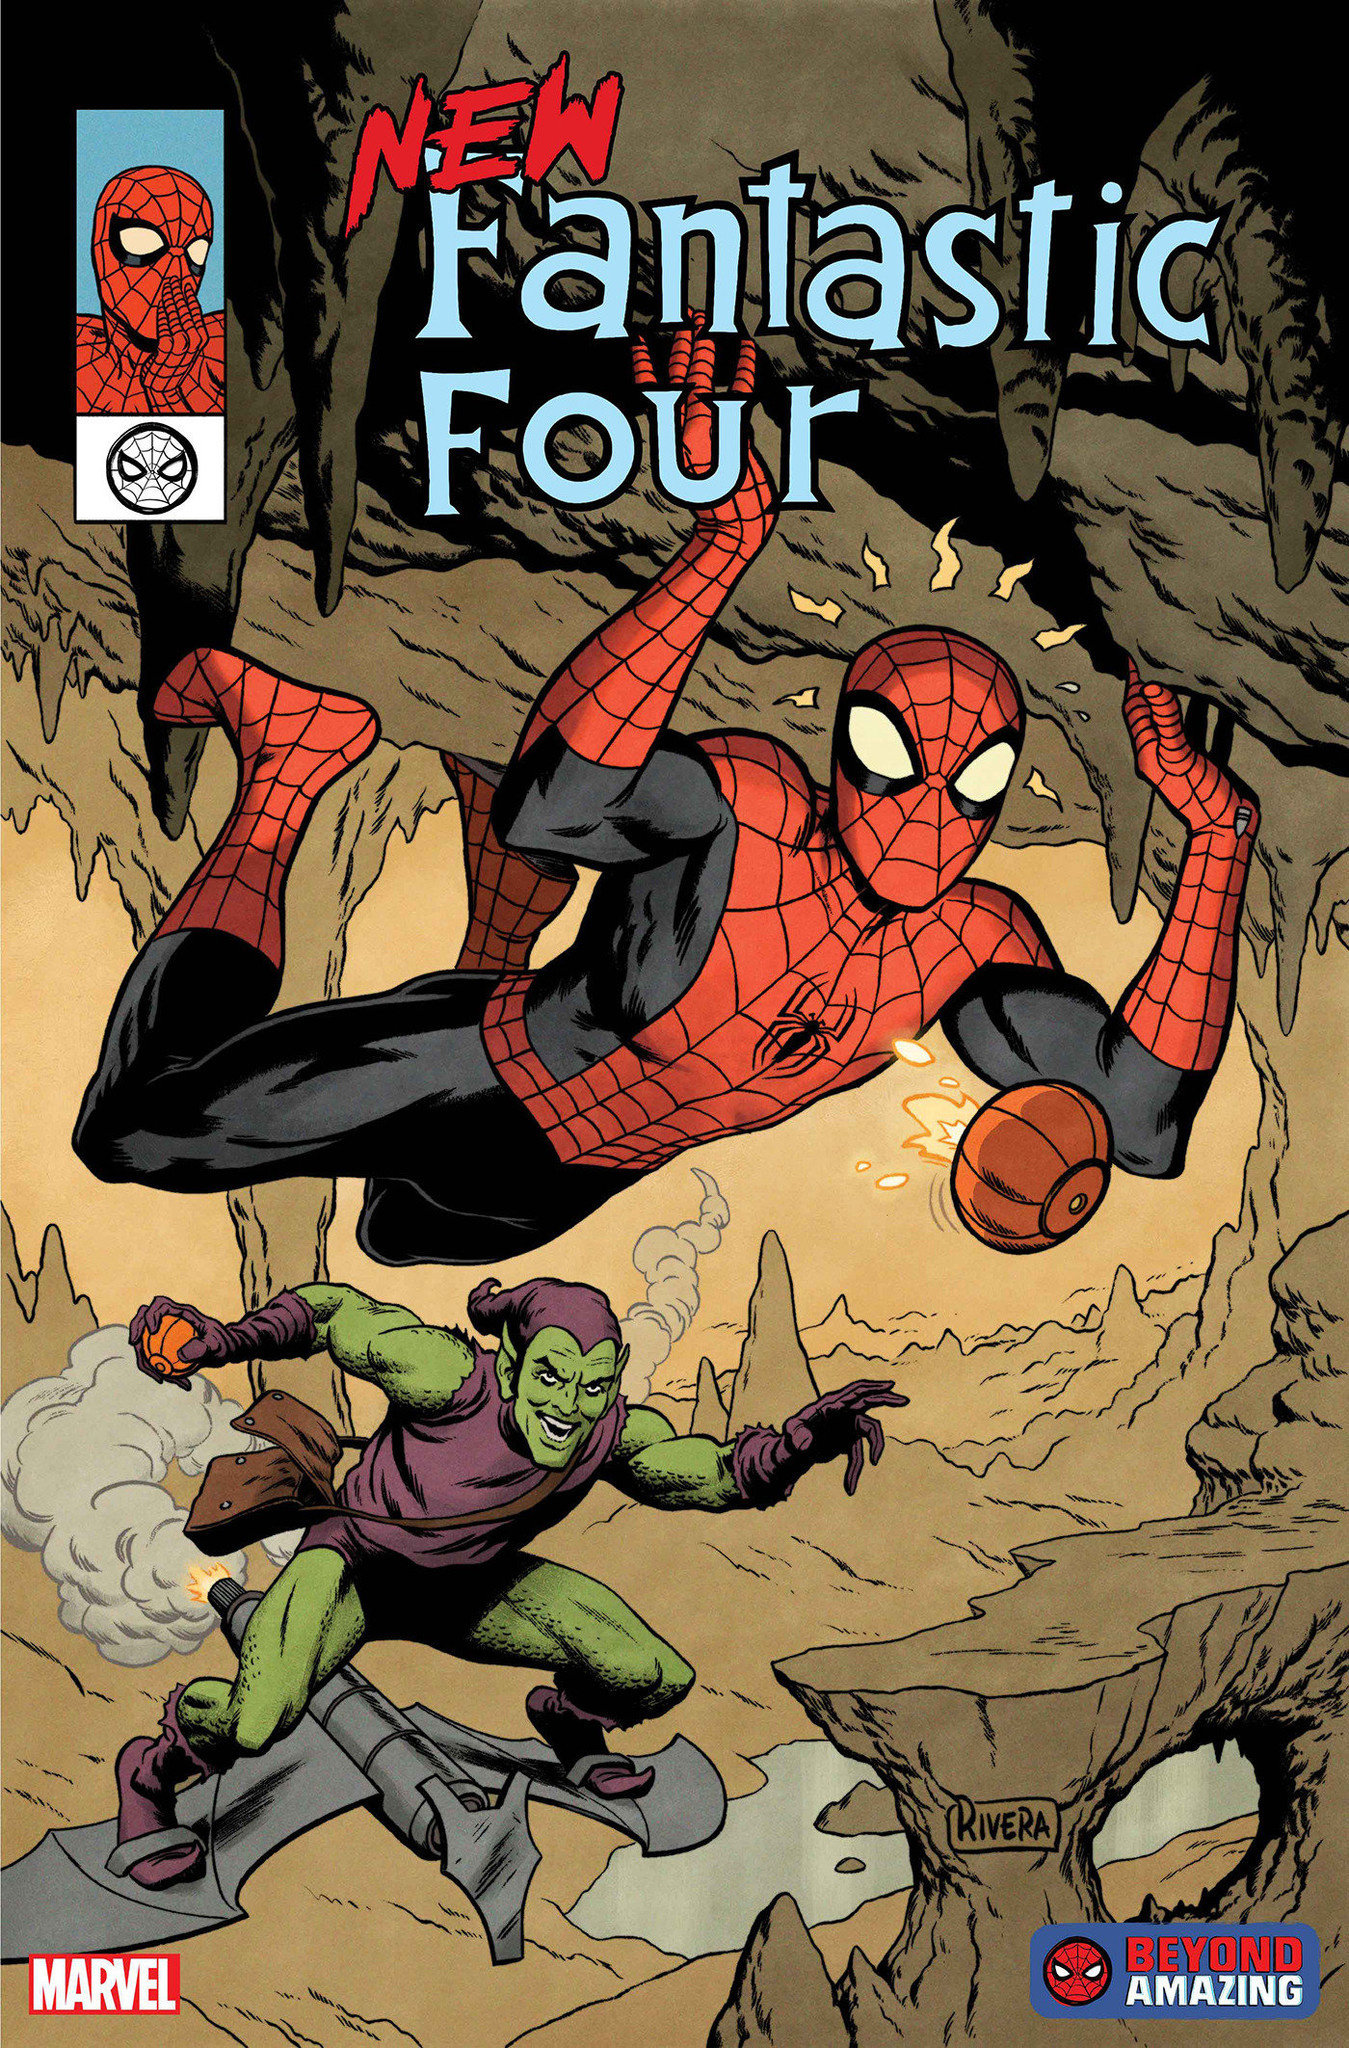 Fantastic Four New Fantastic Four 4 Rivera Beyond Amazing Spider-Man Variant